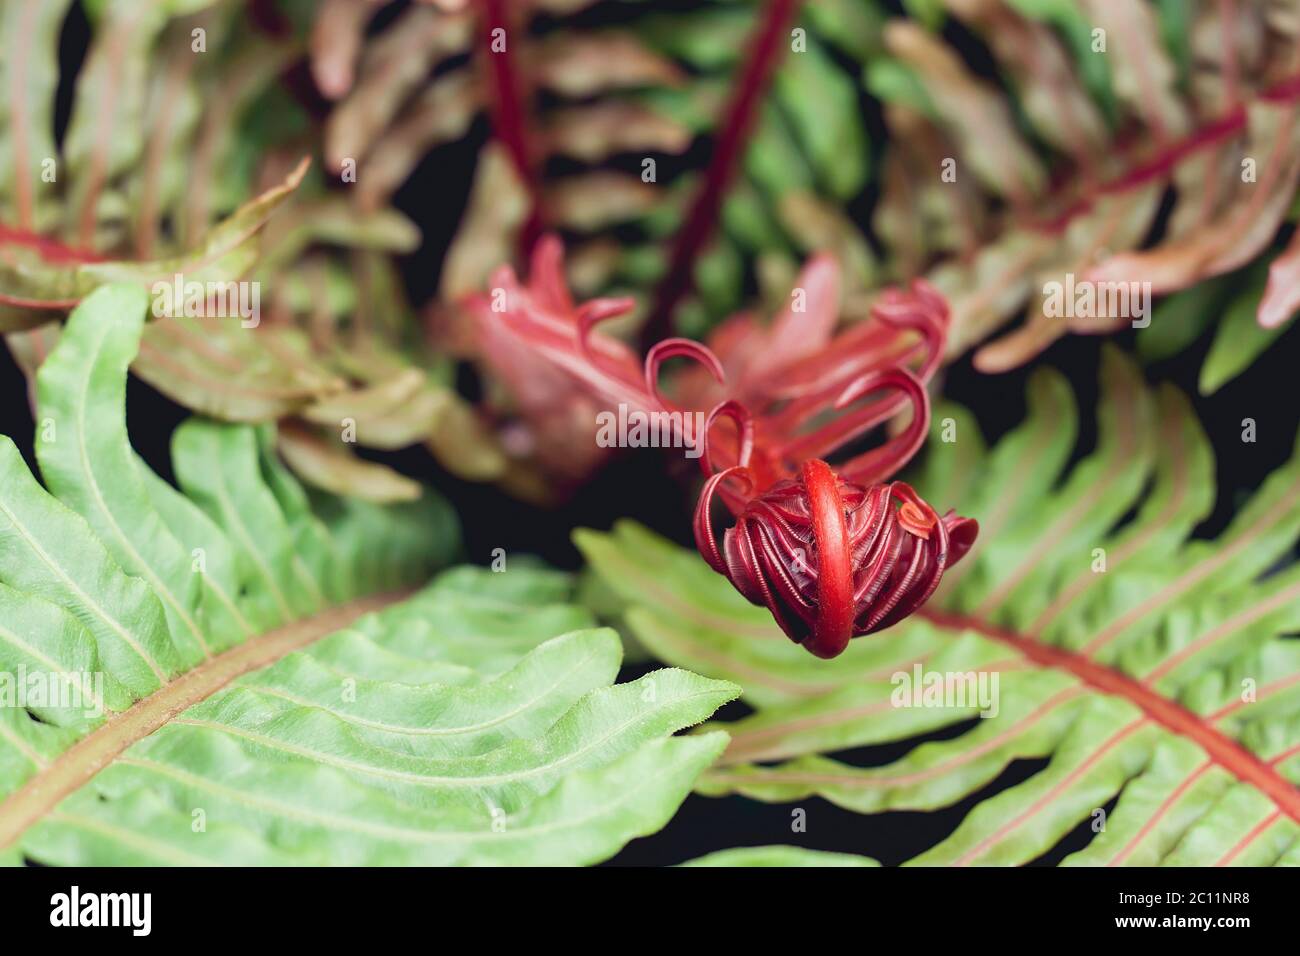 Brazilian dwarf tree fern red colored unfolding fronds Stock Photo